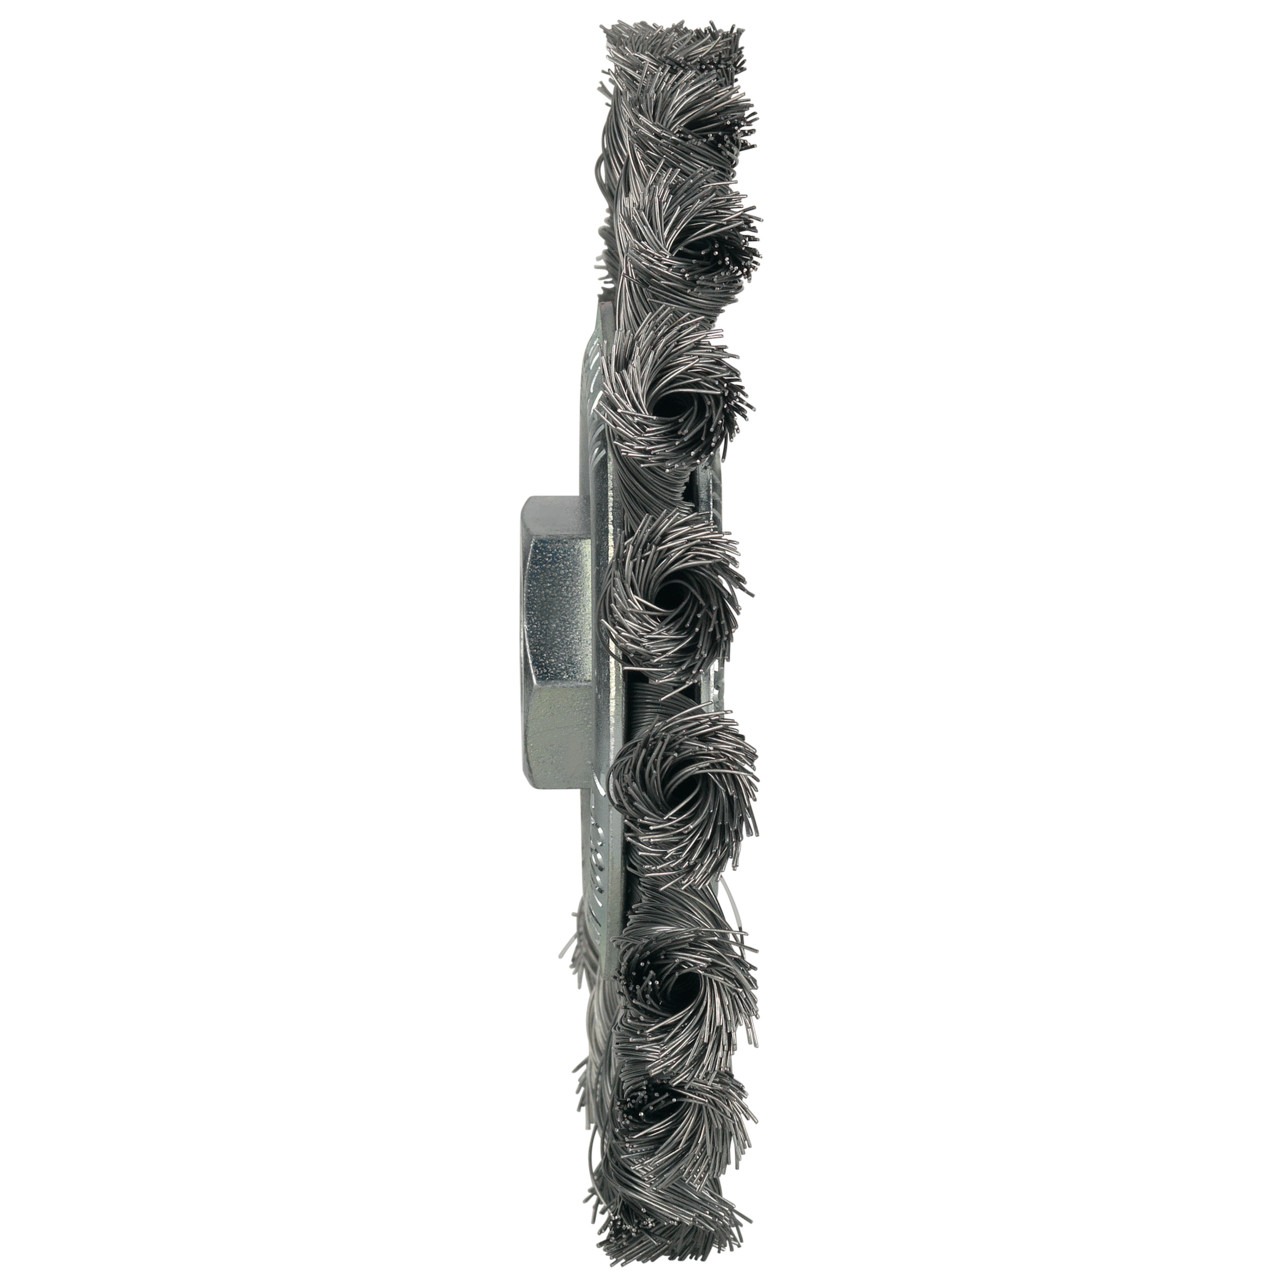 TYROLIT spazzole rotonde DxLxH 100x11x22x16 Per acciaio, forma: 1RDZ - (spazzola rotonda), Art. 34275969